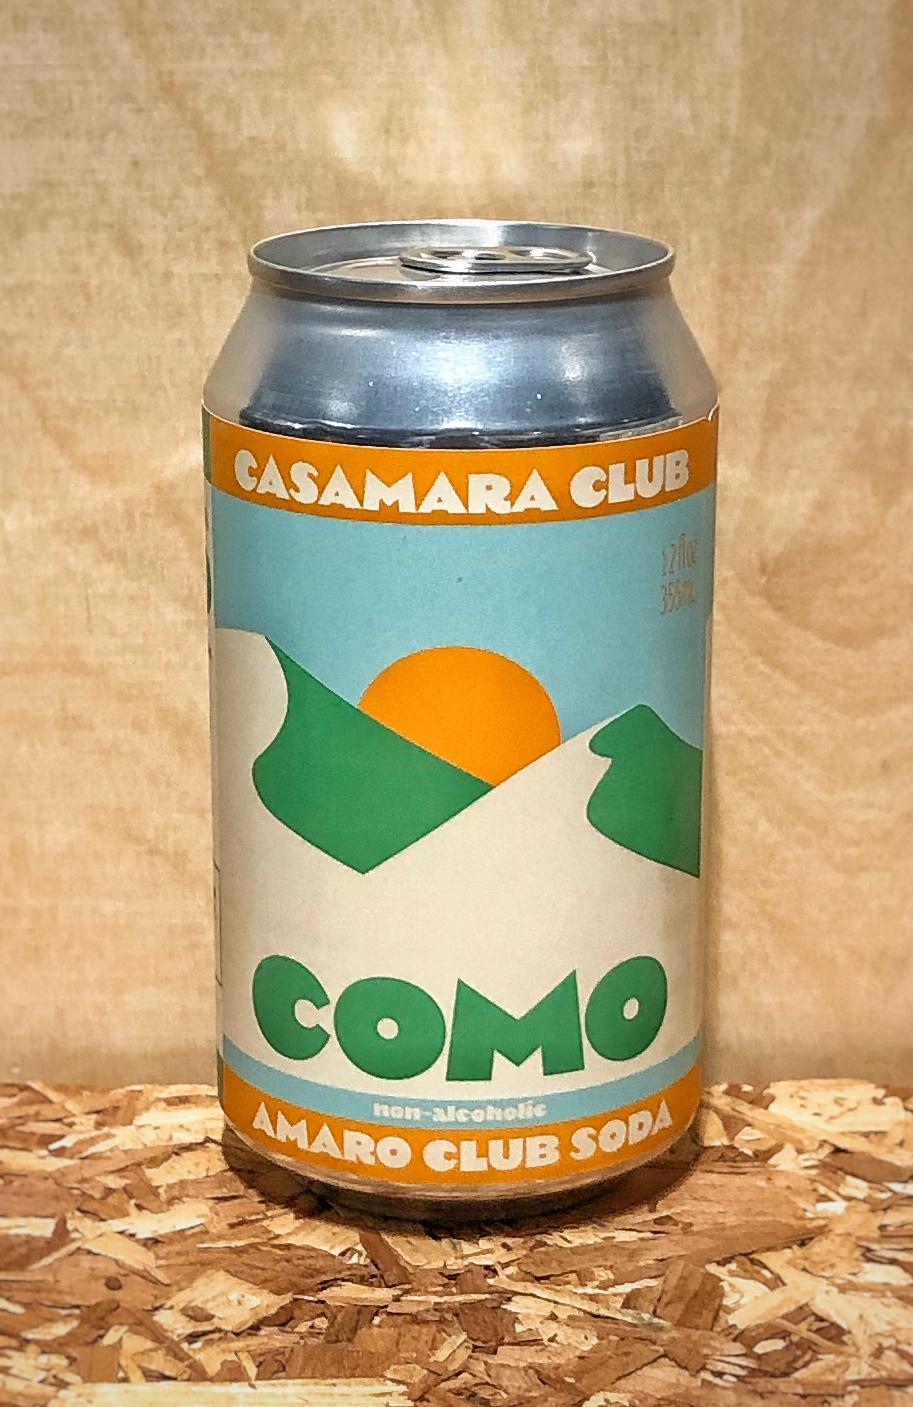 Casamara Club 'Como' Non-Alcoholic Amaro Club Soda (Detroit, MI)